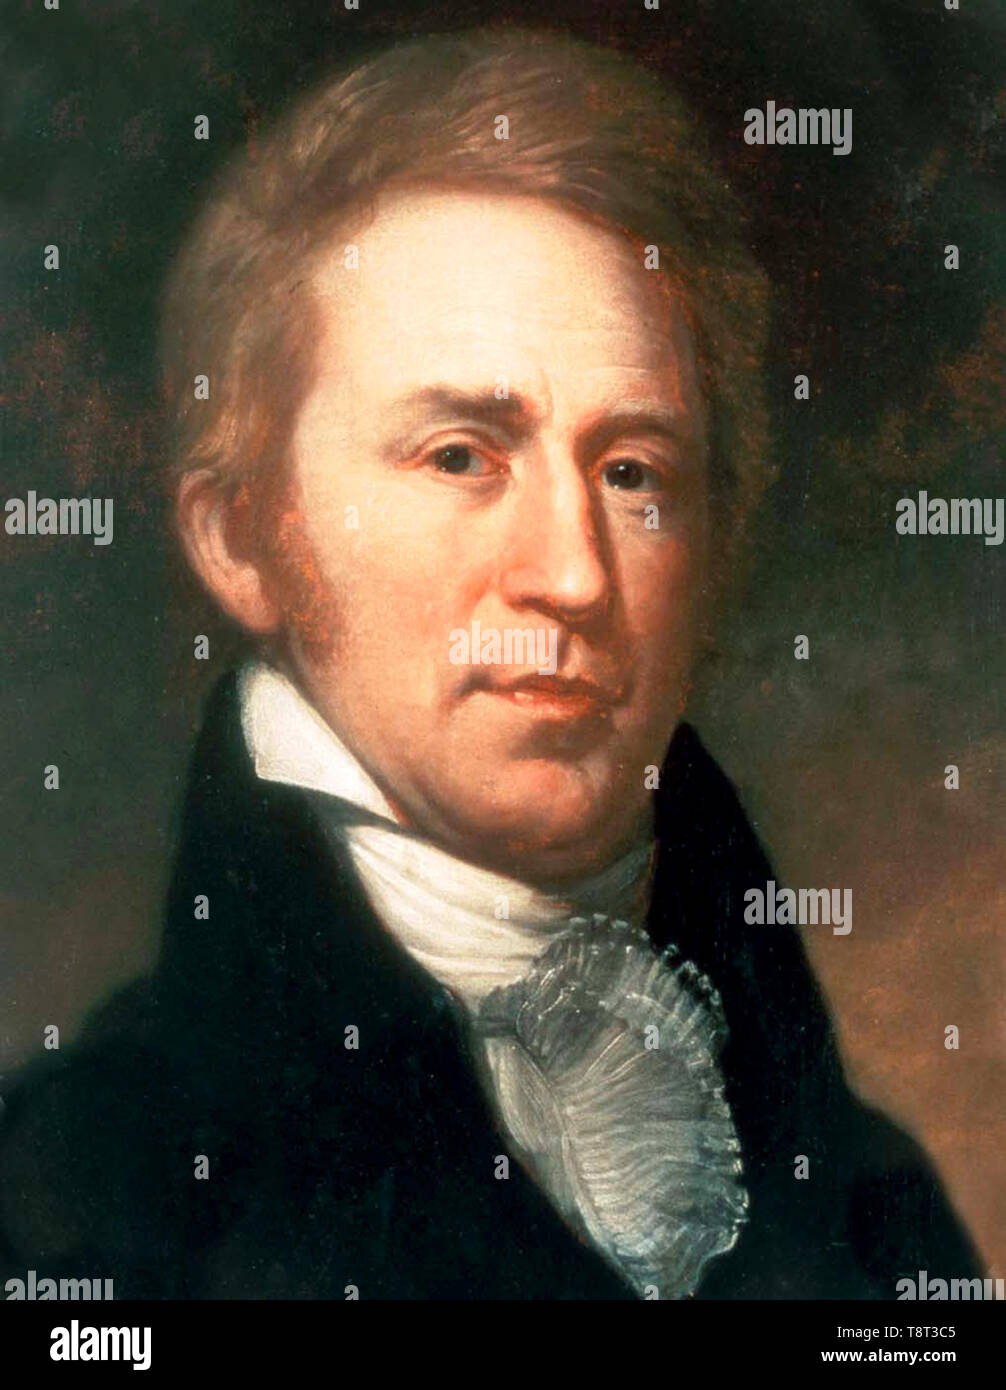 William Clark (1770 - 1838) American explorer. Dipinto di Charles Willson Peale Foto Stock